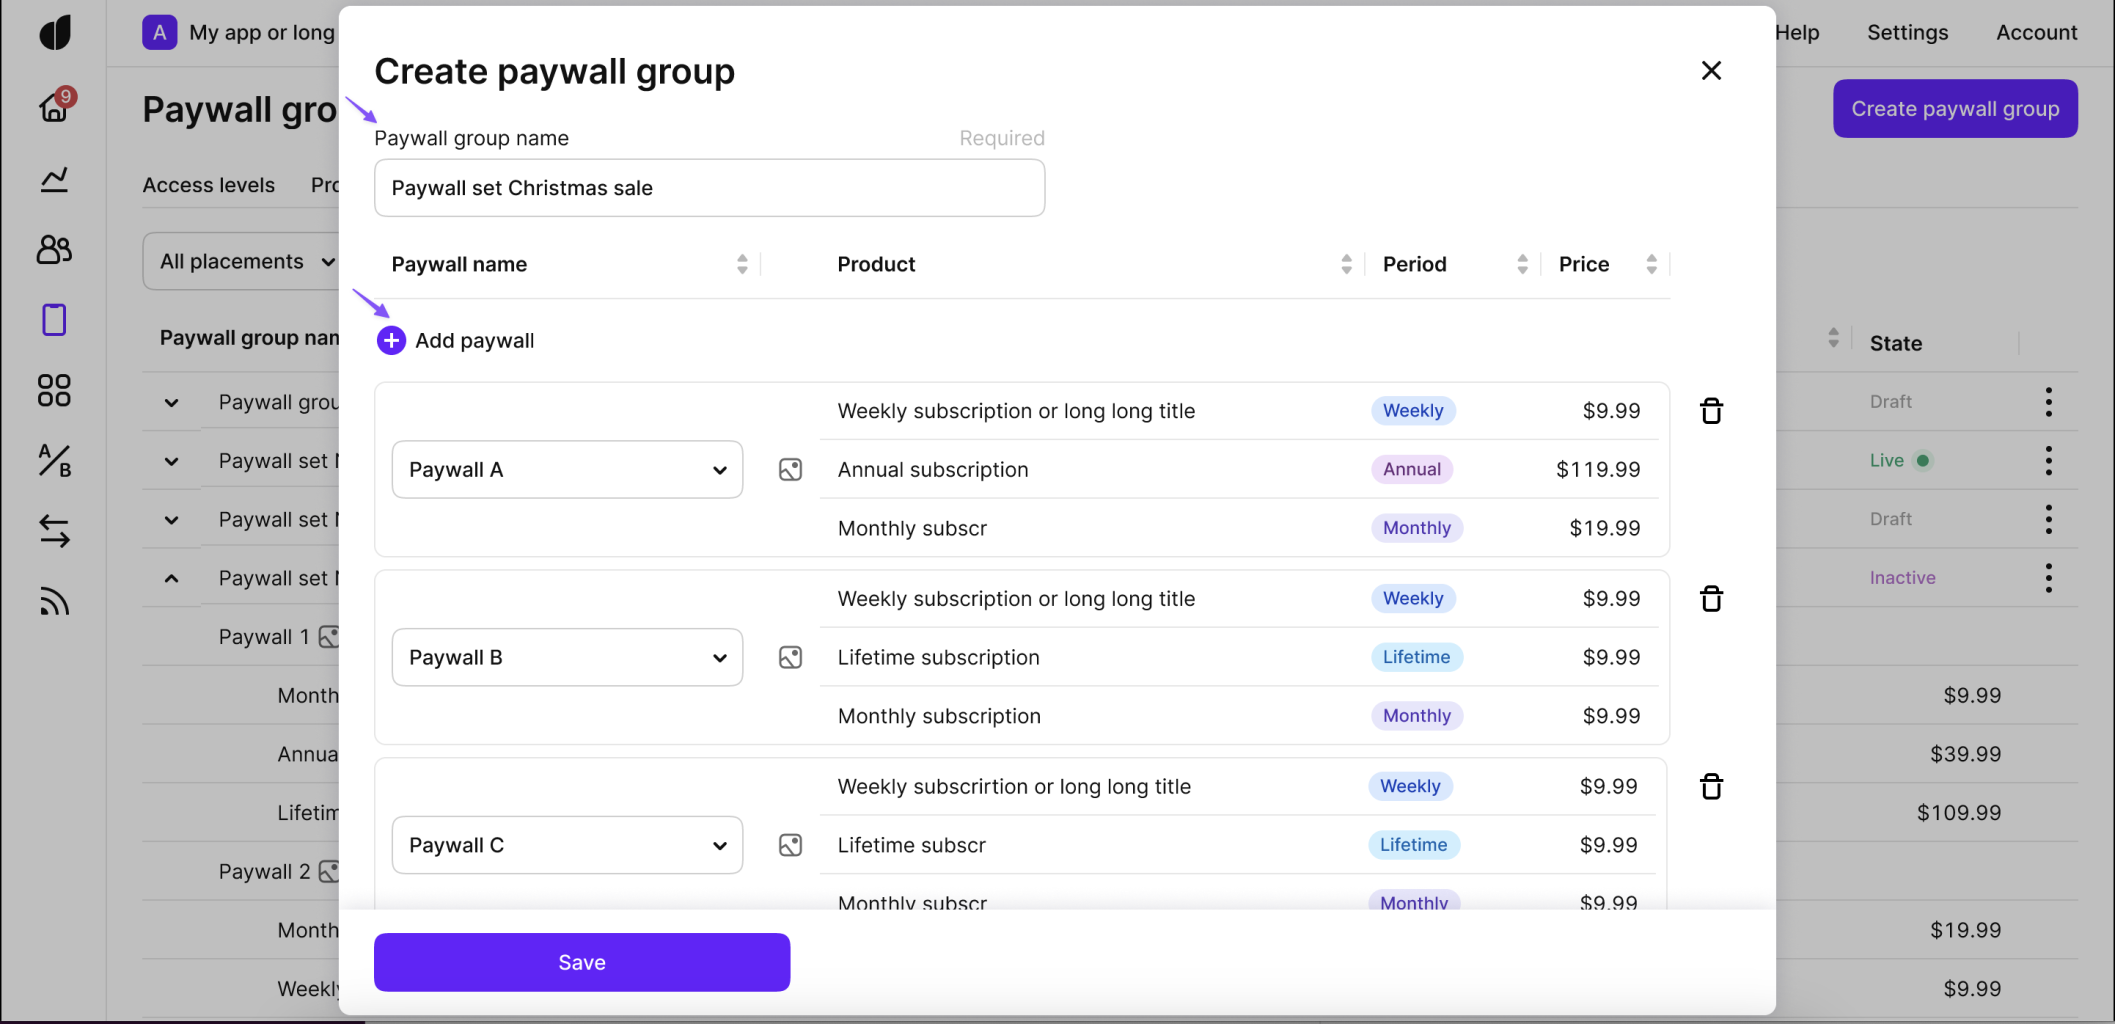 Create paywall group